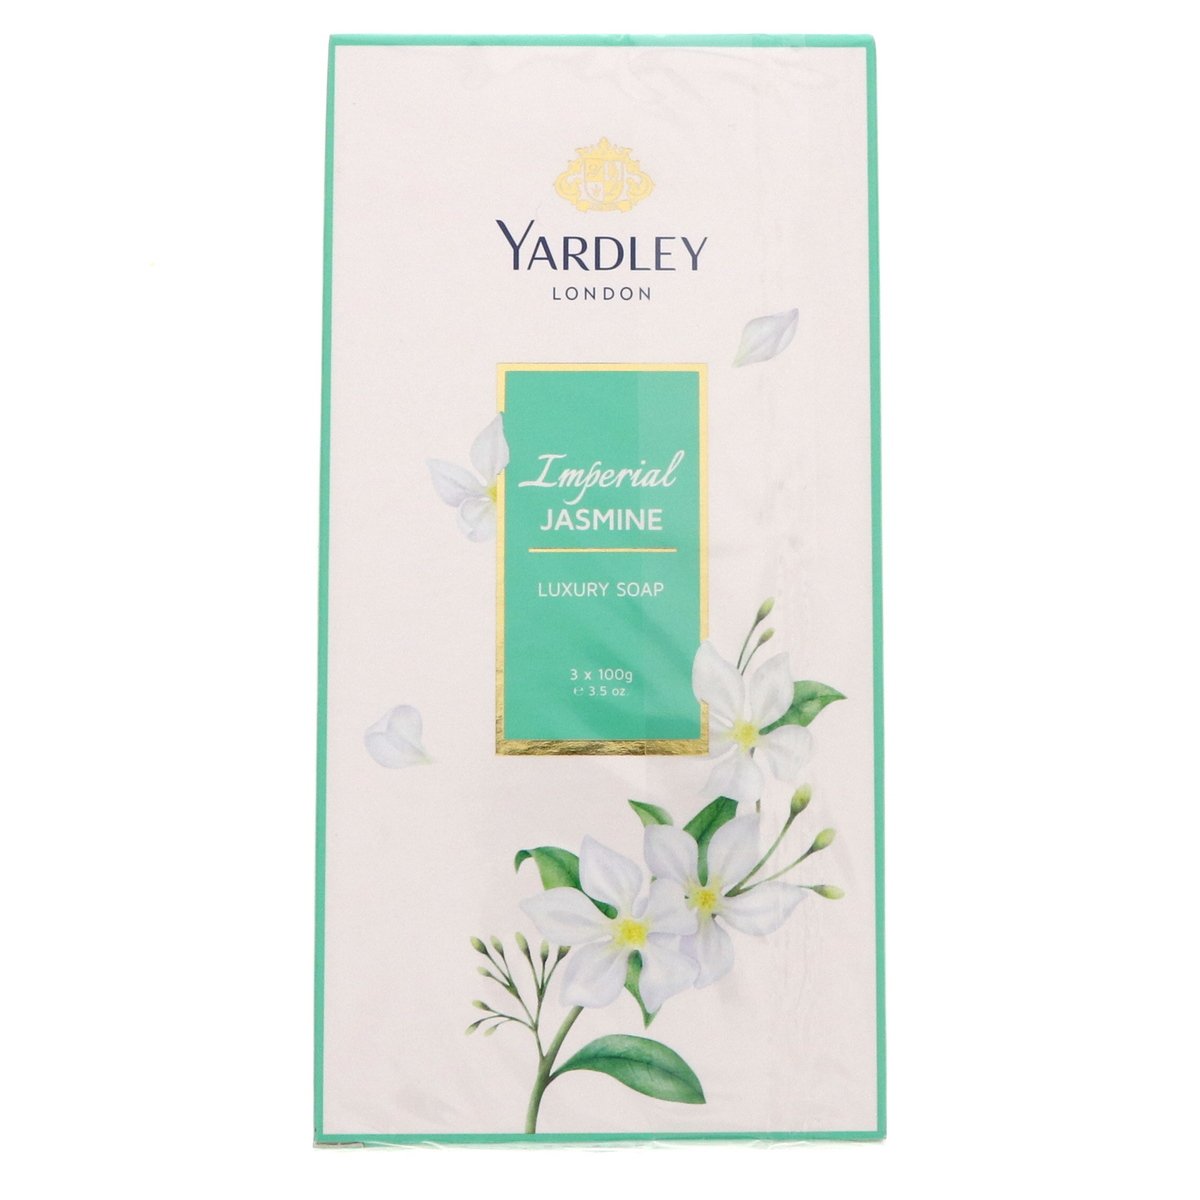 Yardley Imperial Jasmine Luxury Soap 3 x 100 g